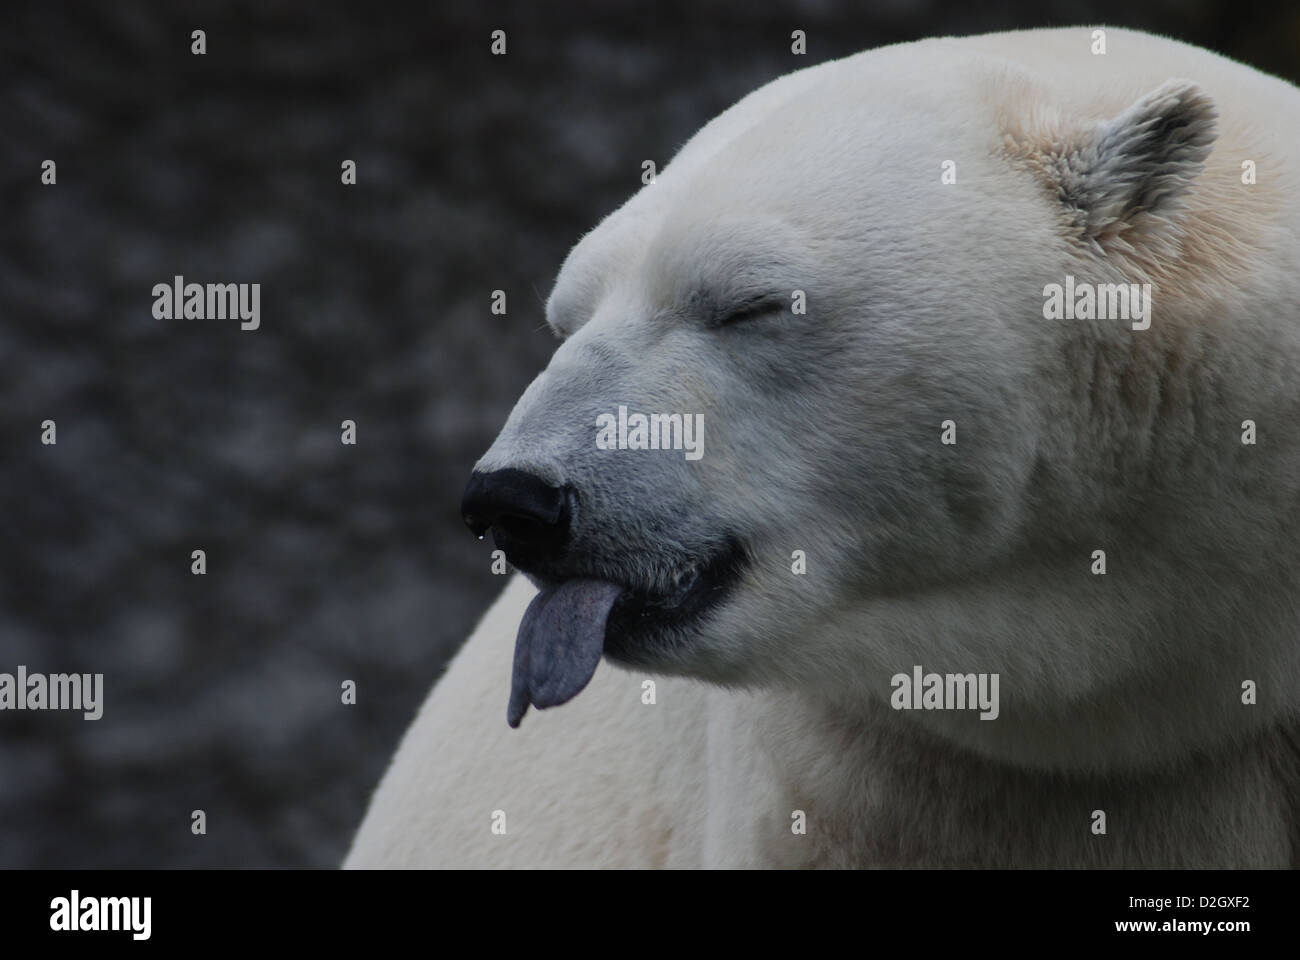 Bear le saca la lengua, el oso polar (Ursus maritimus), oso polar, Eisbär streckt Zunge raus, Eisbär (Ursus maritimus), Polarbär Foto de stock